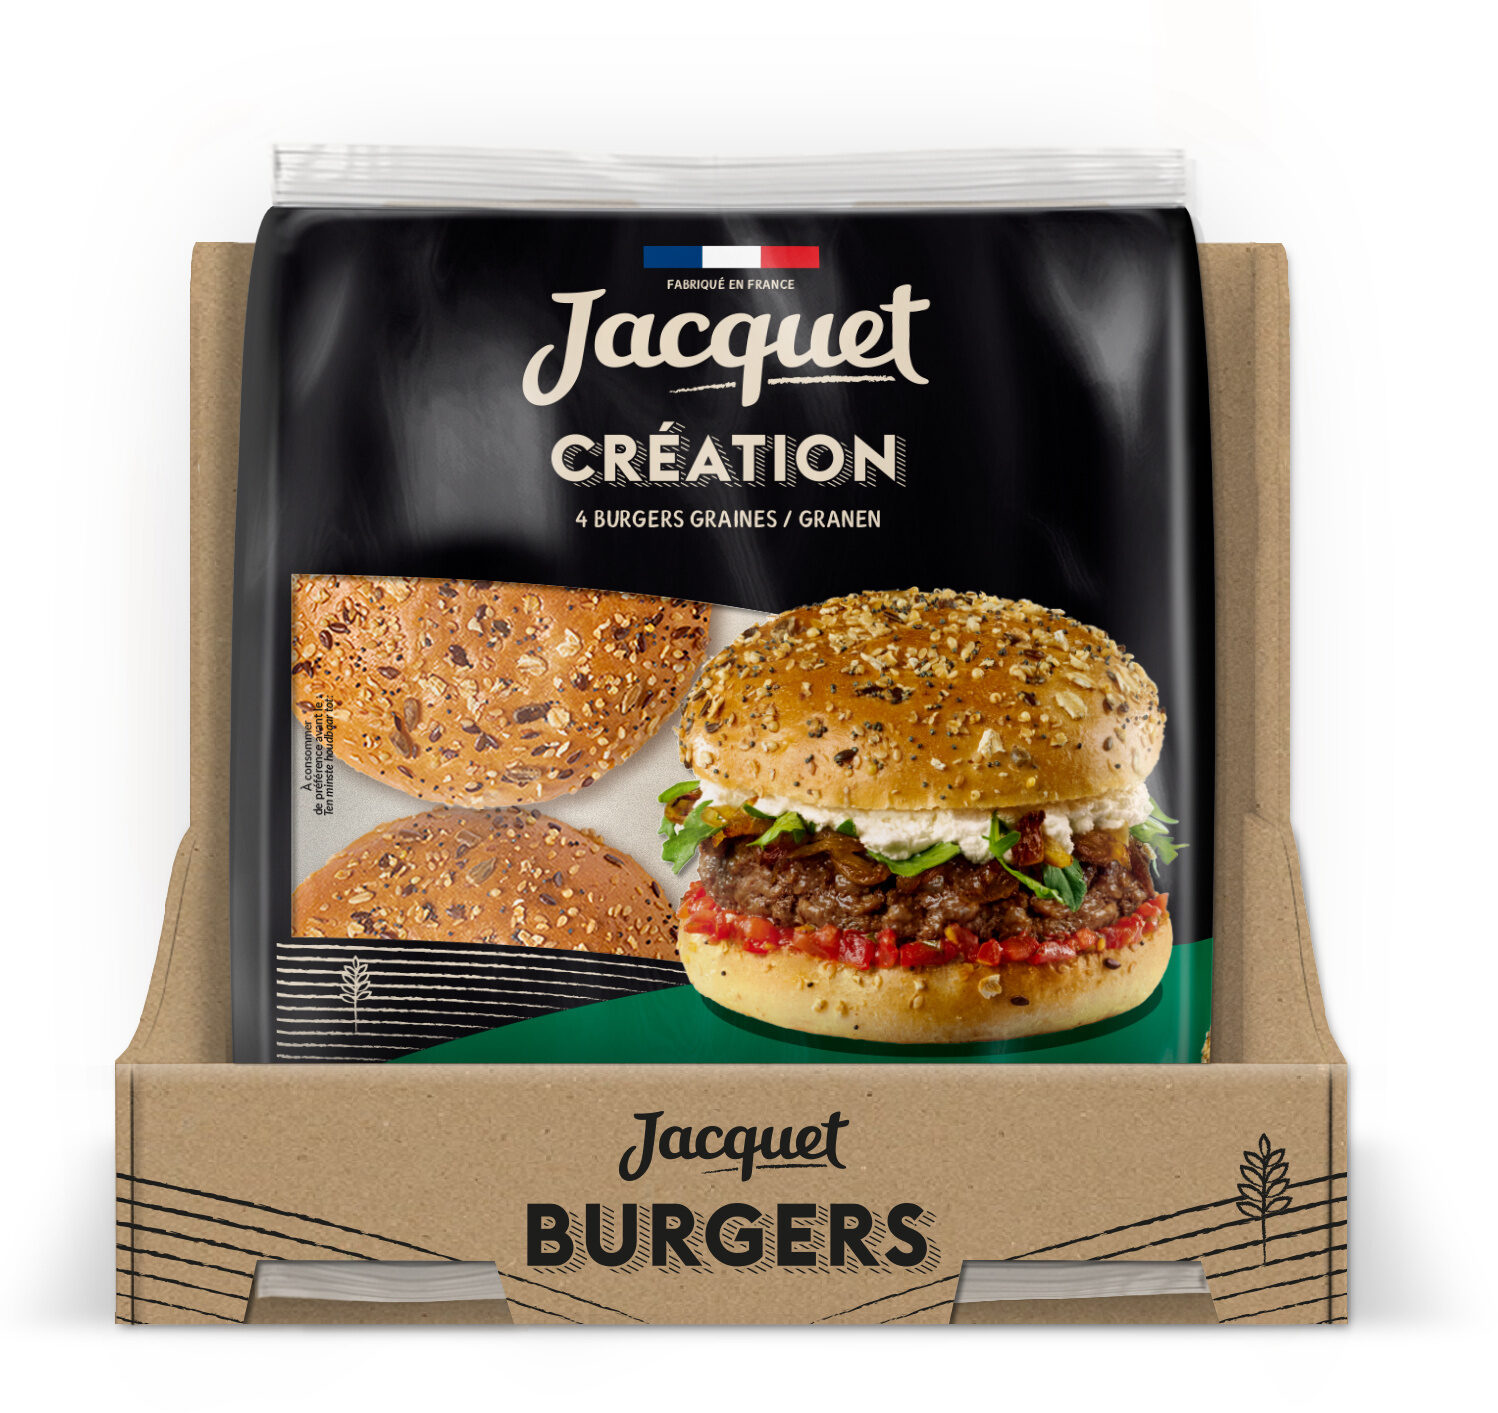 Burger creation graines x4 260g - Product - fr